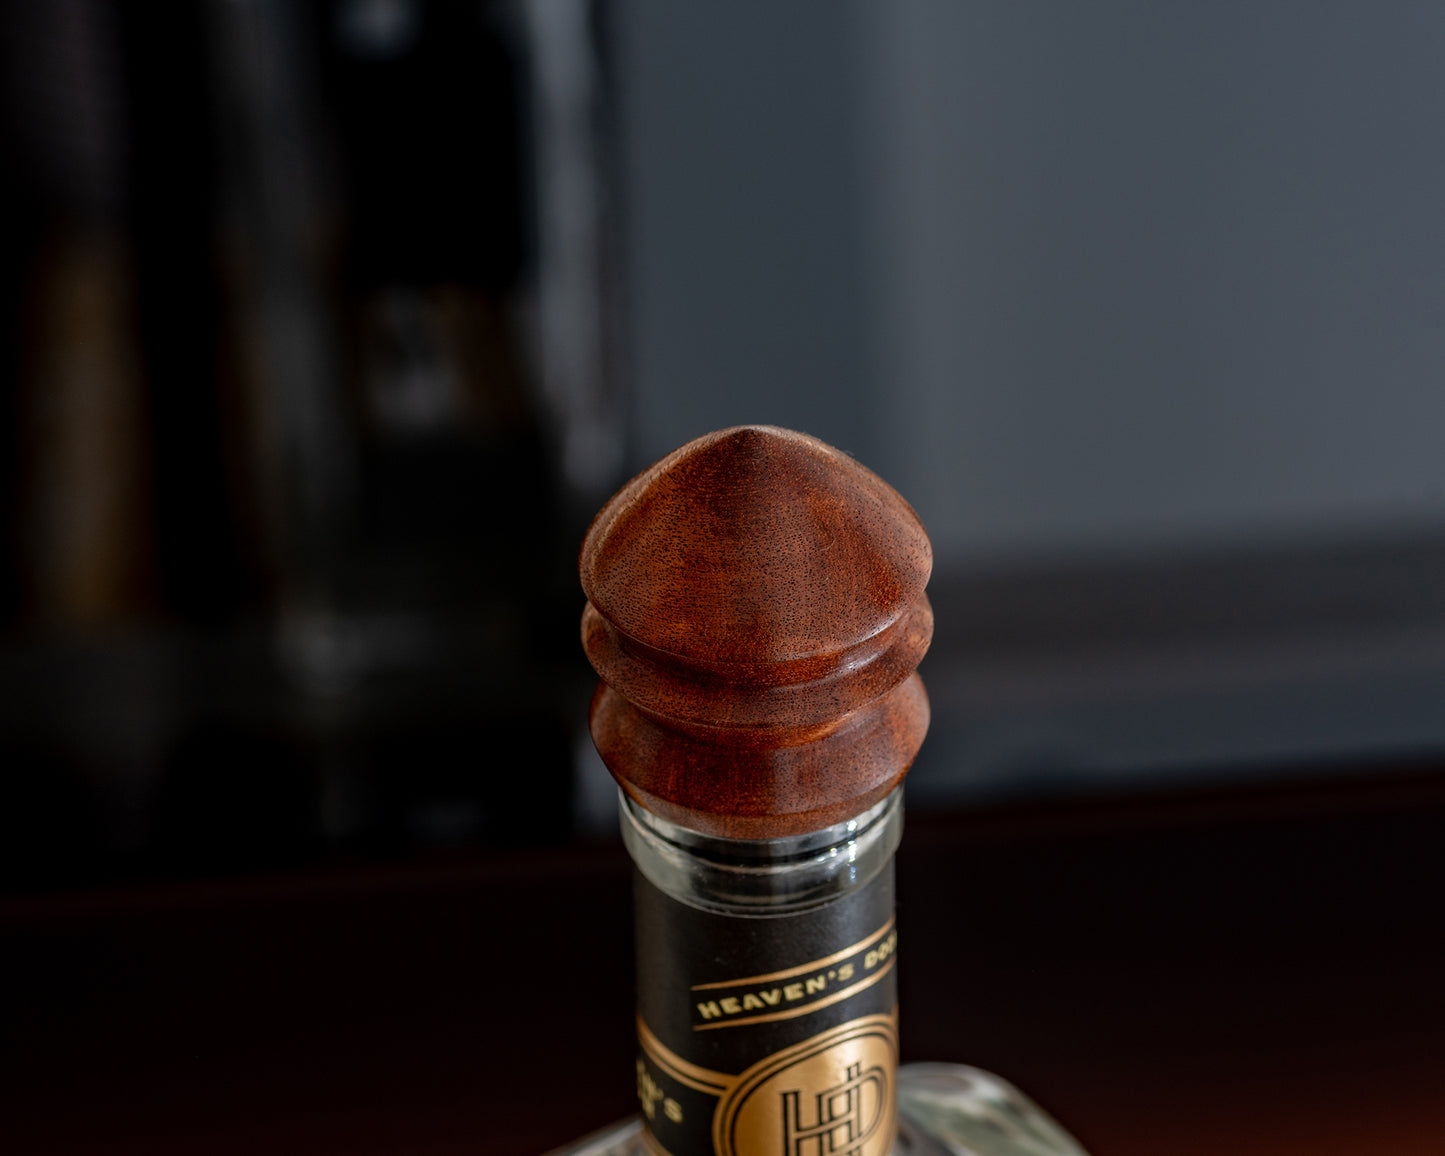 Hand-turned Wooden Bottle Stopper - Sapele Mahogany